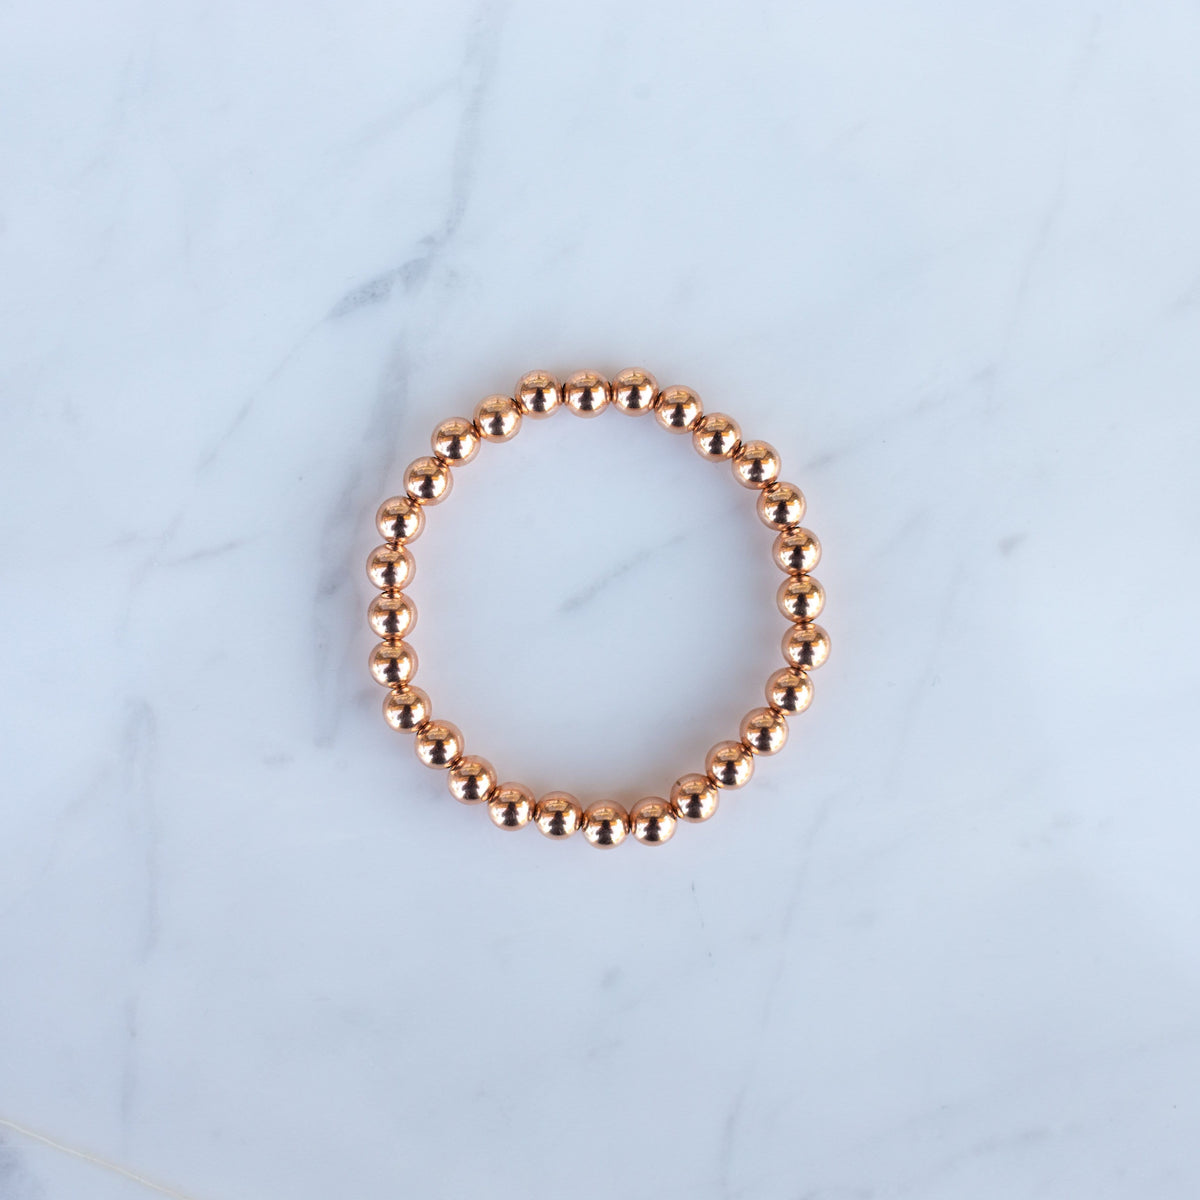 7mm Rose Gold Filled Beaded Bracelet